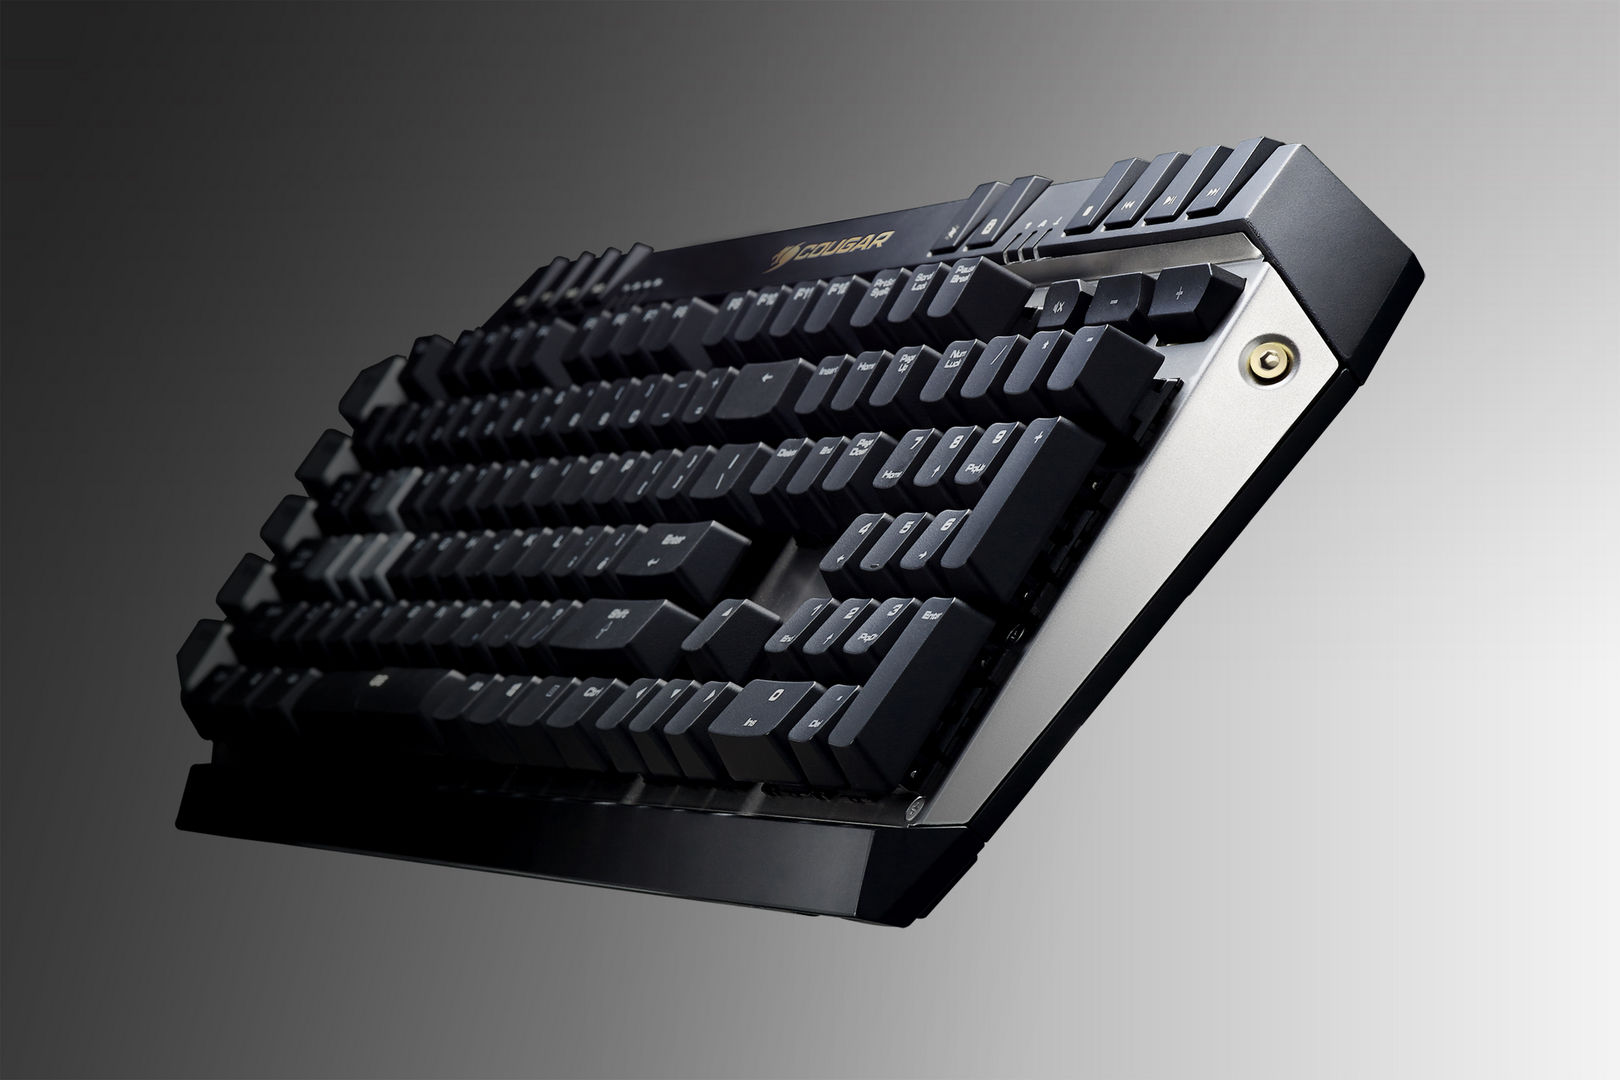 700K PC-Gaming-Tastatur